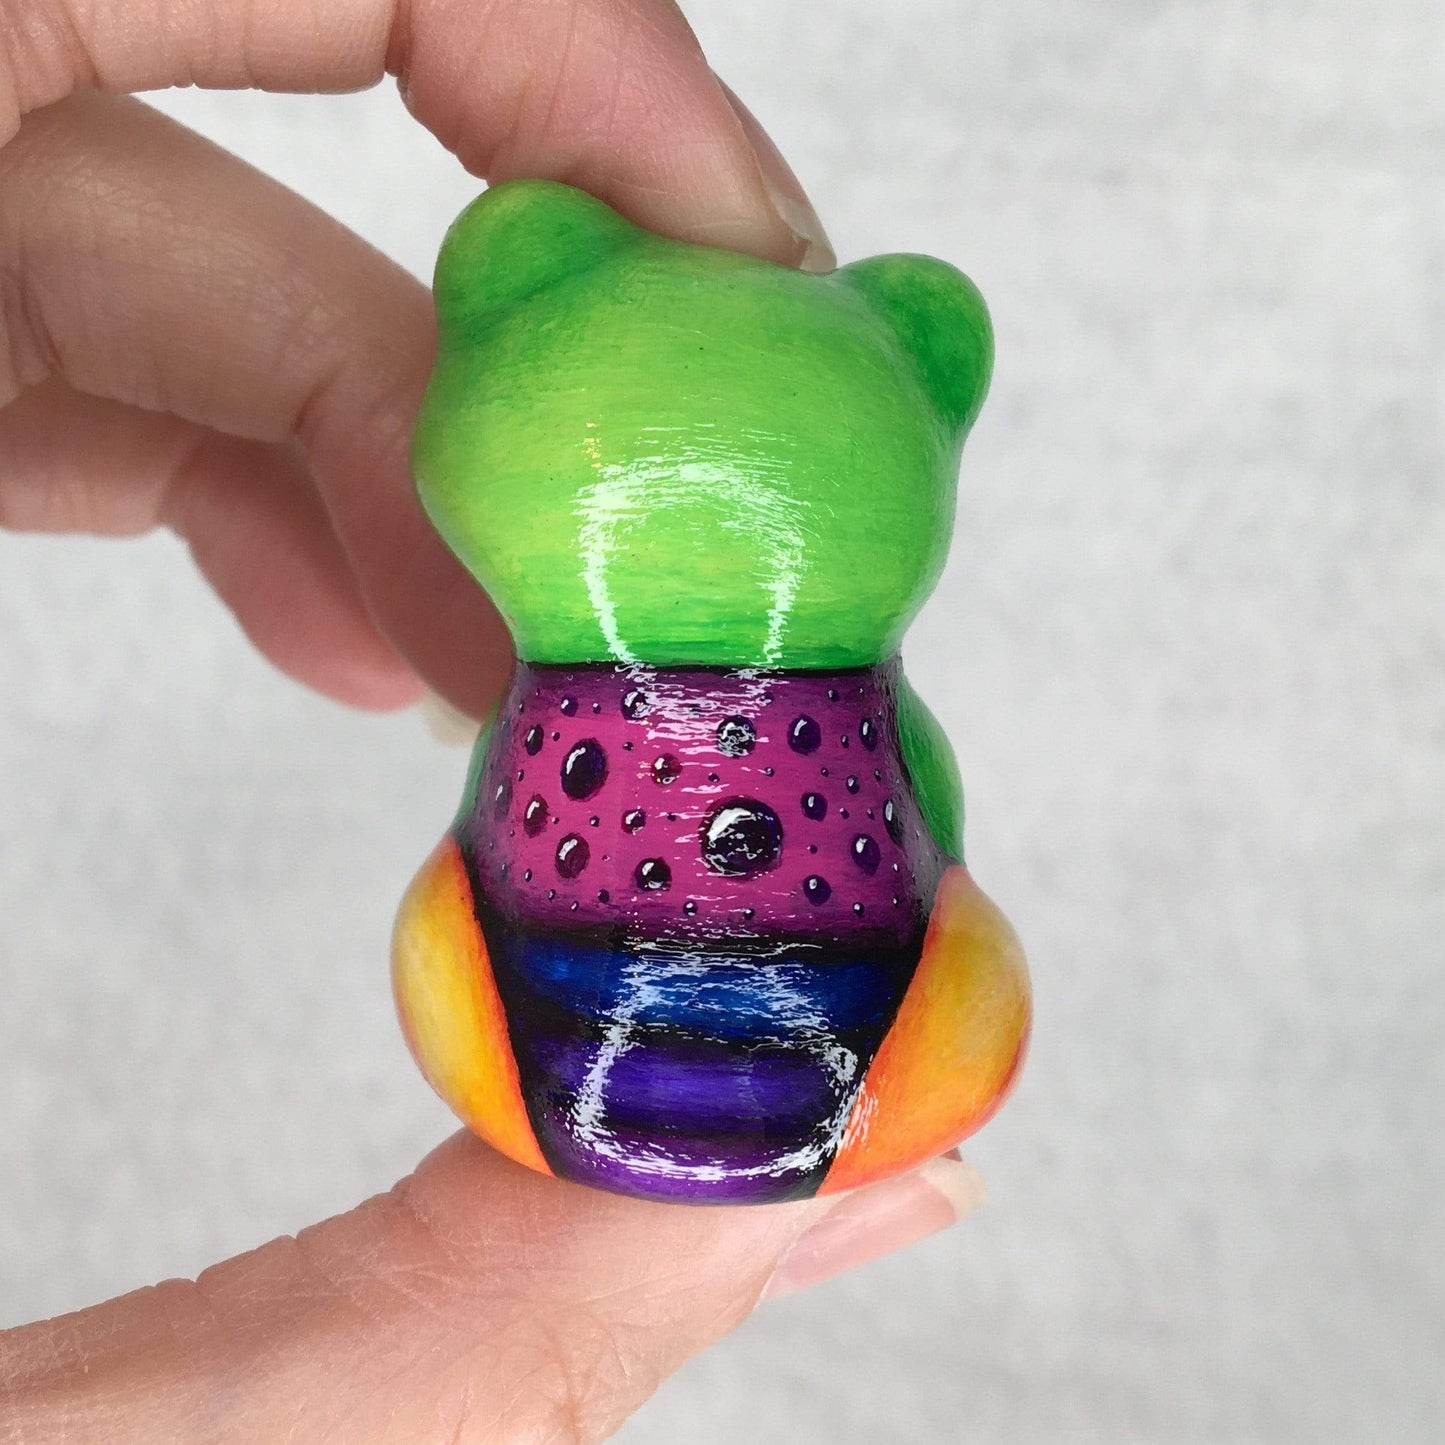 Ollie, Hand-painted Frog | Ceramics ceramics JPArtwork Jenny Pond